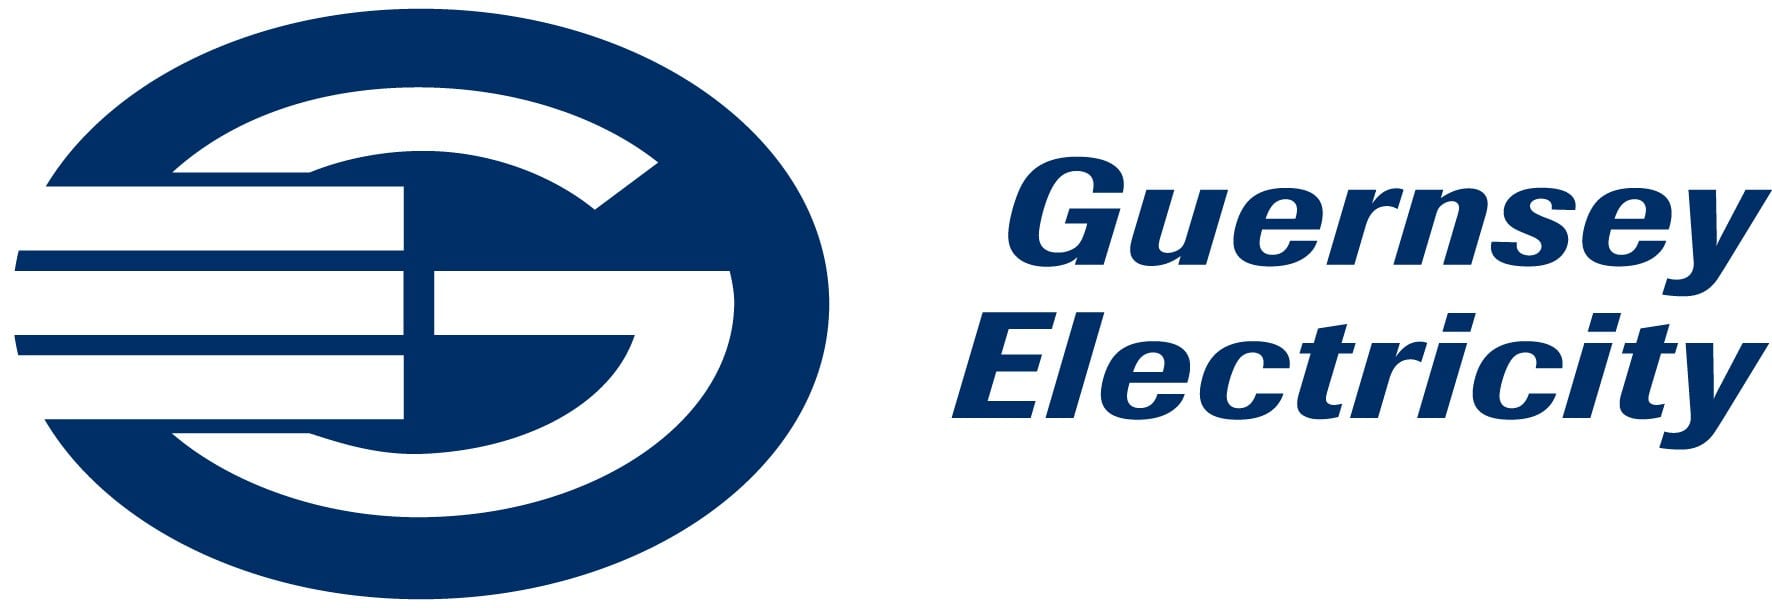 Gsy-Electricity-Logo-1